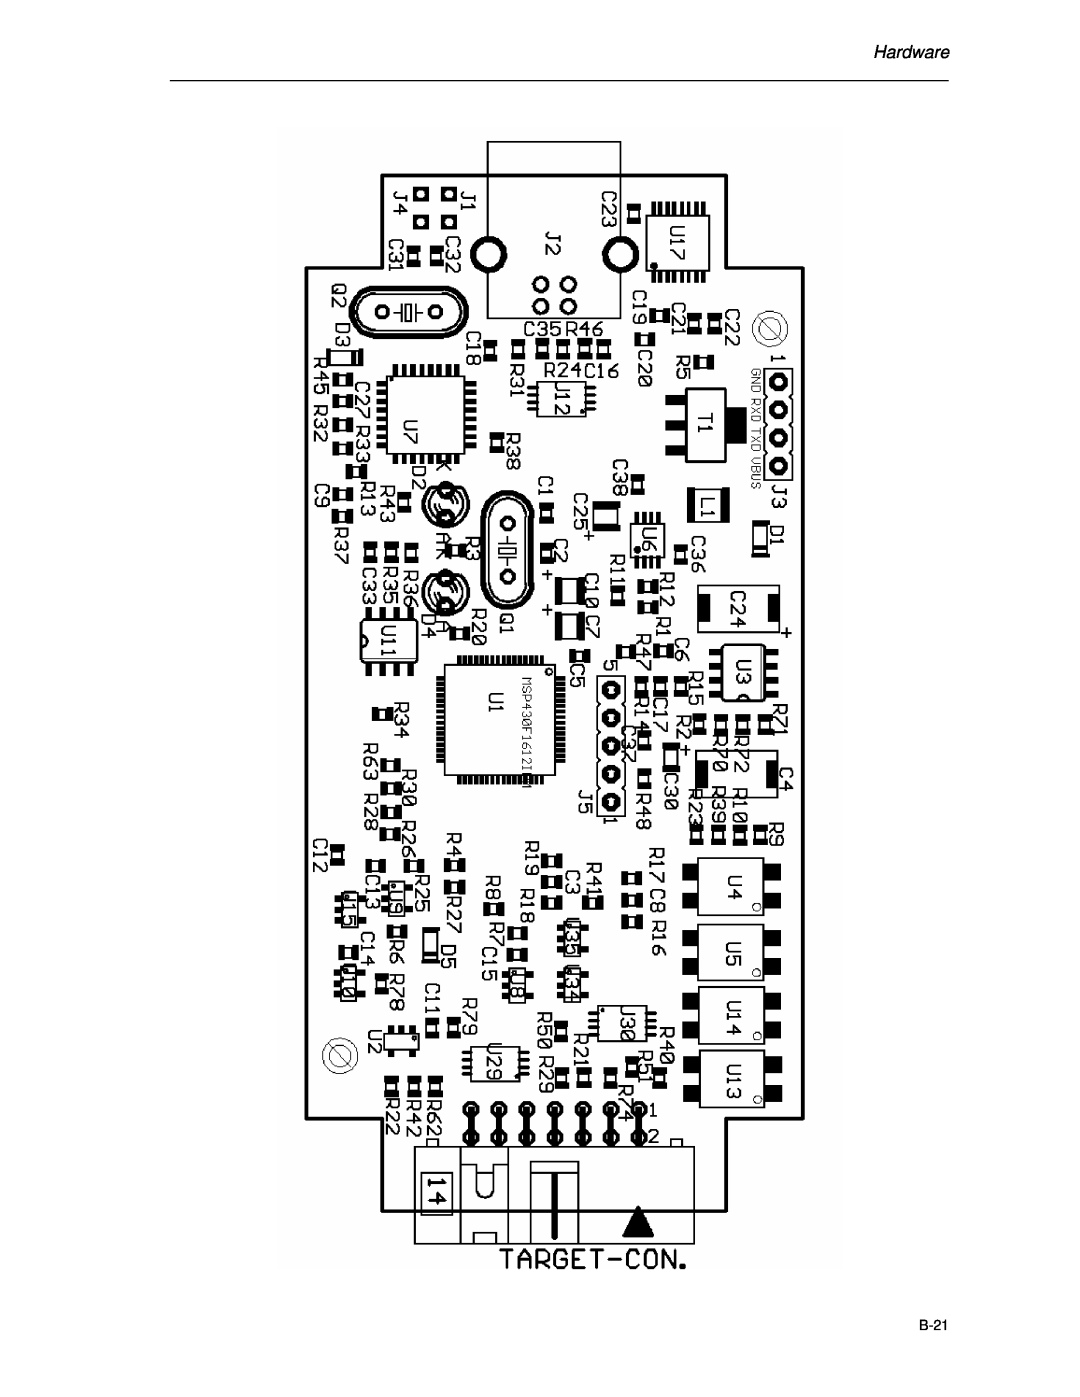 Texas Instruments MSP-FET430 manual Hardware, B-21 